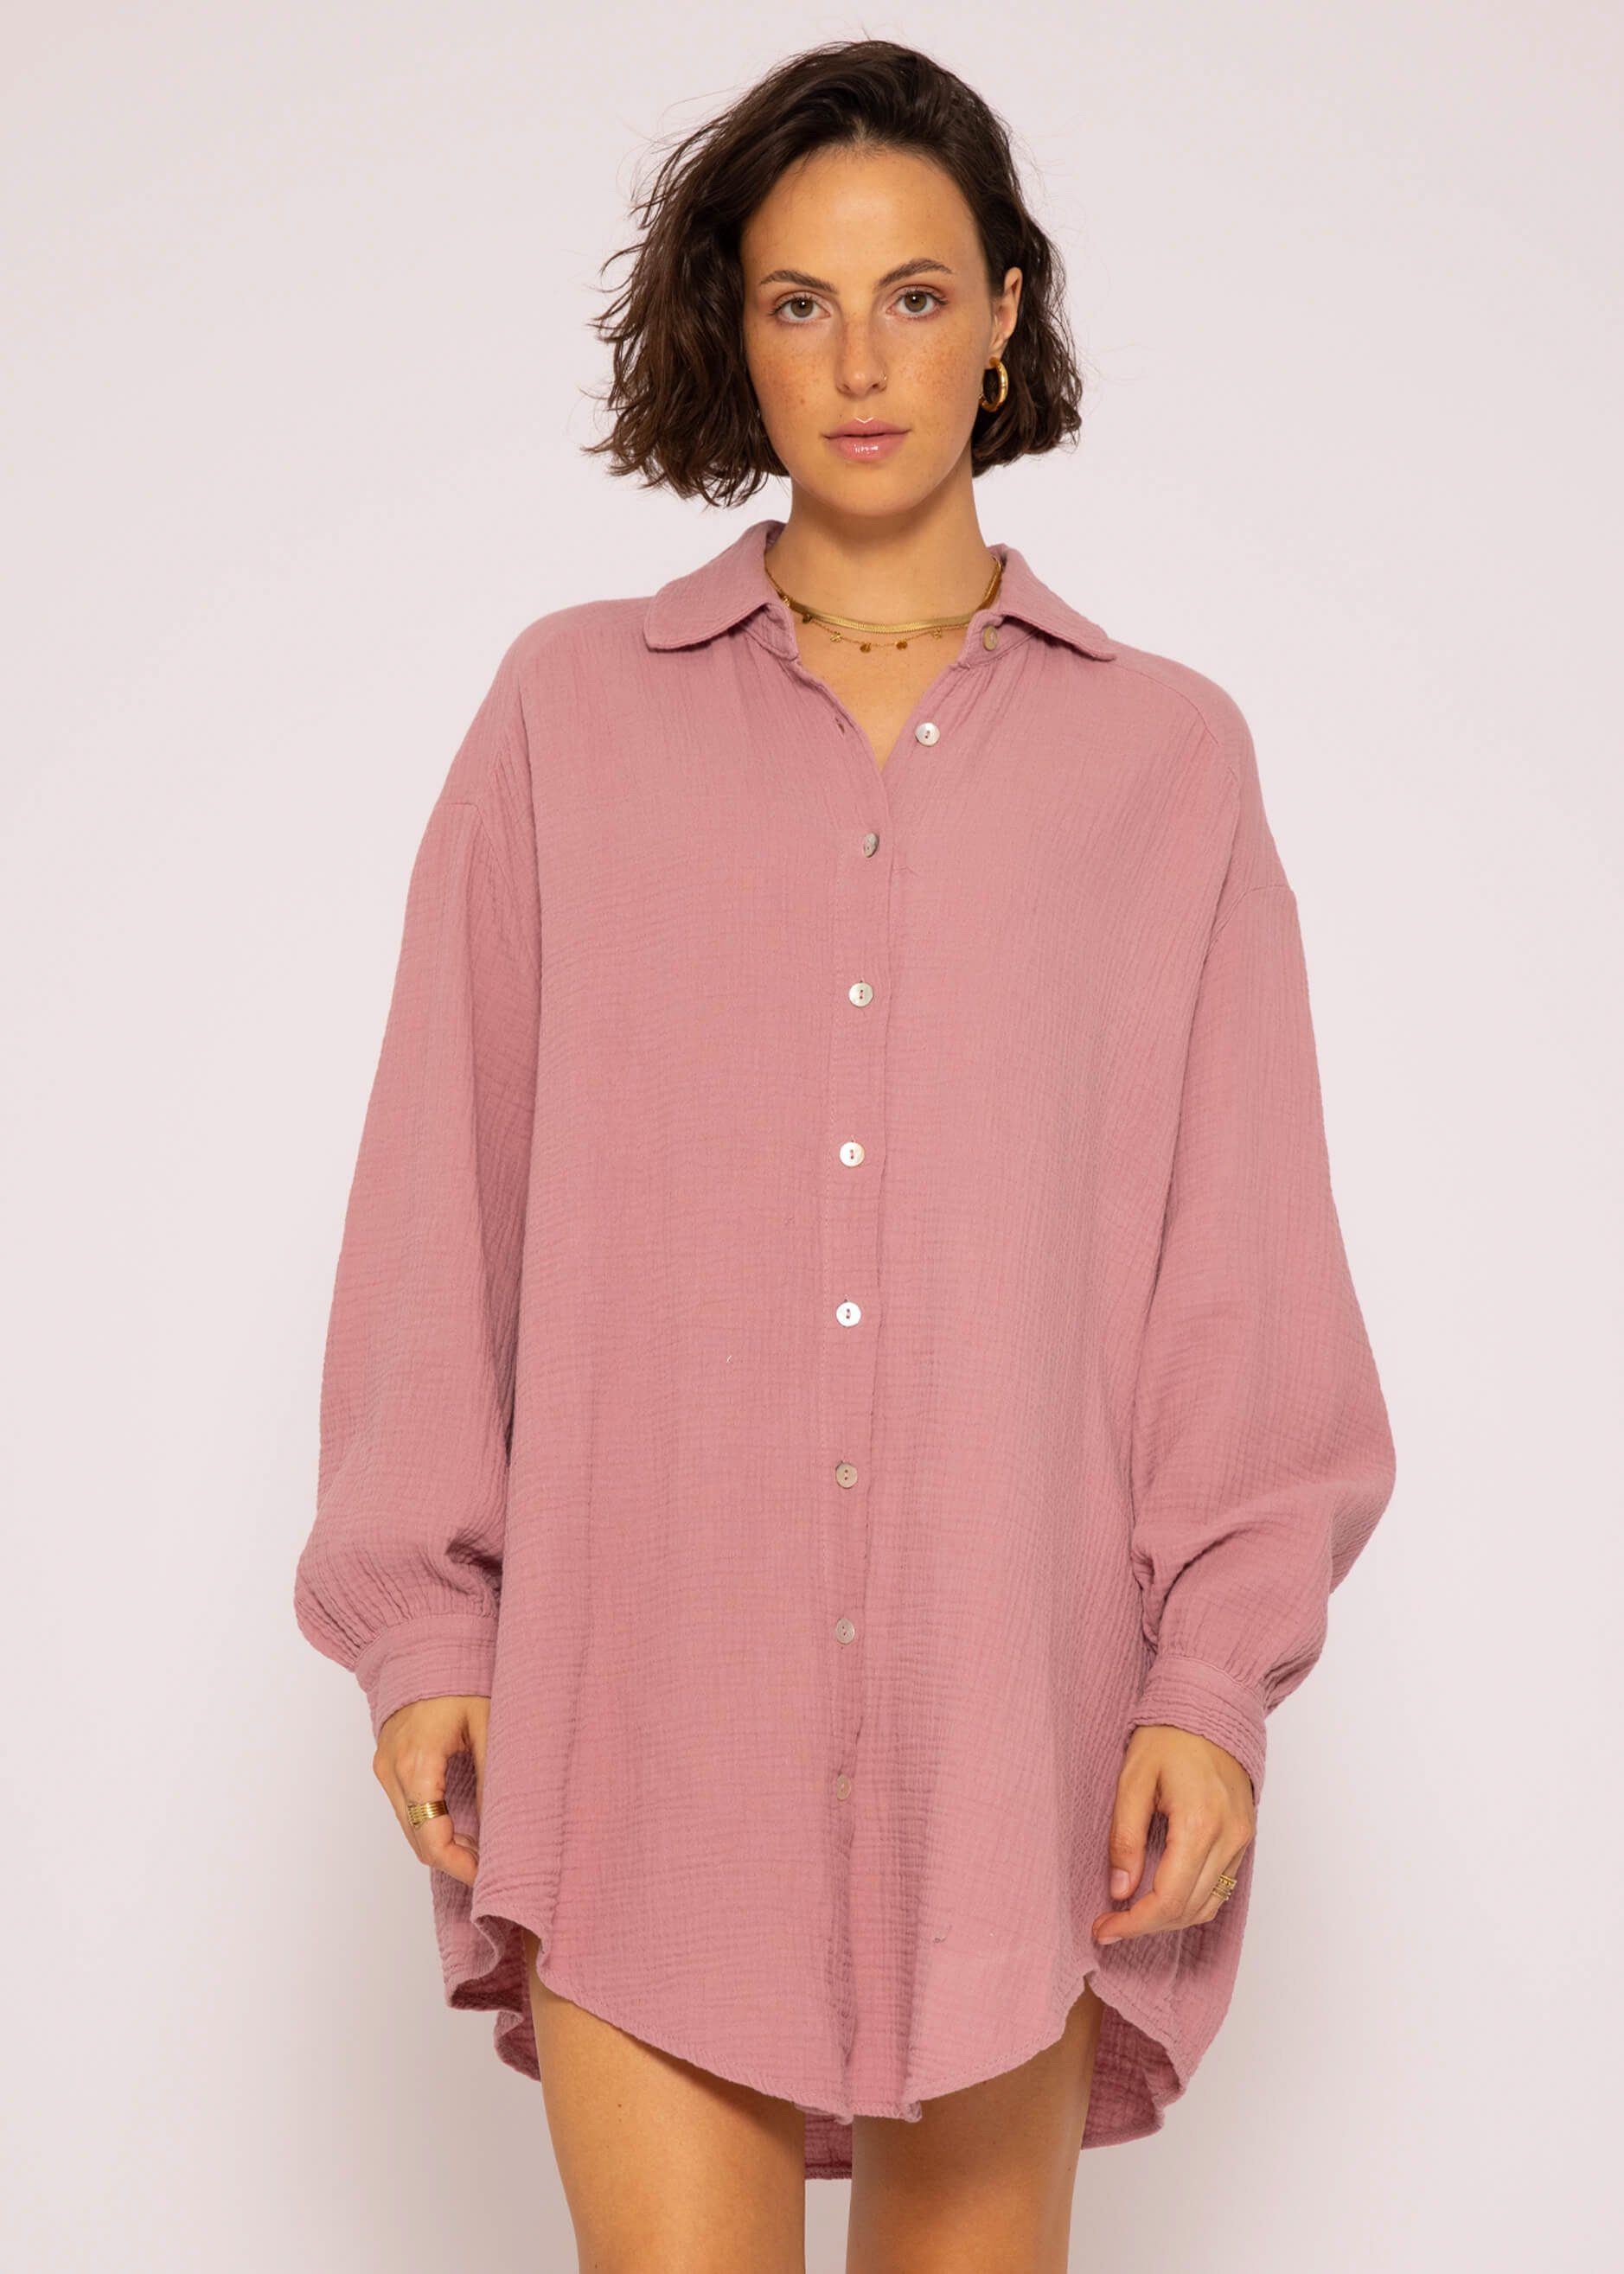 SASSYCLASSY Longbluse Oversize Musselin Bluse Damen Langarm Hemdbluse lang aus Baumwolle mit V-Ausschnitt, One Size (Gr. 36-48) Altrosa